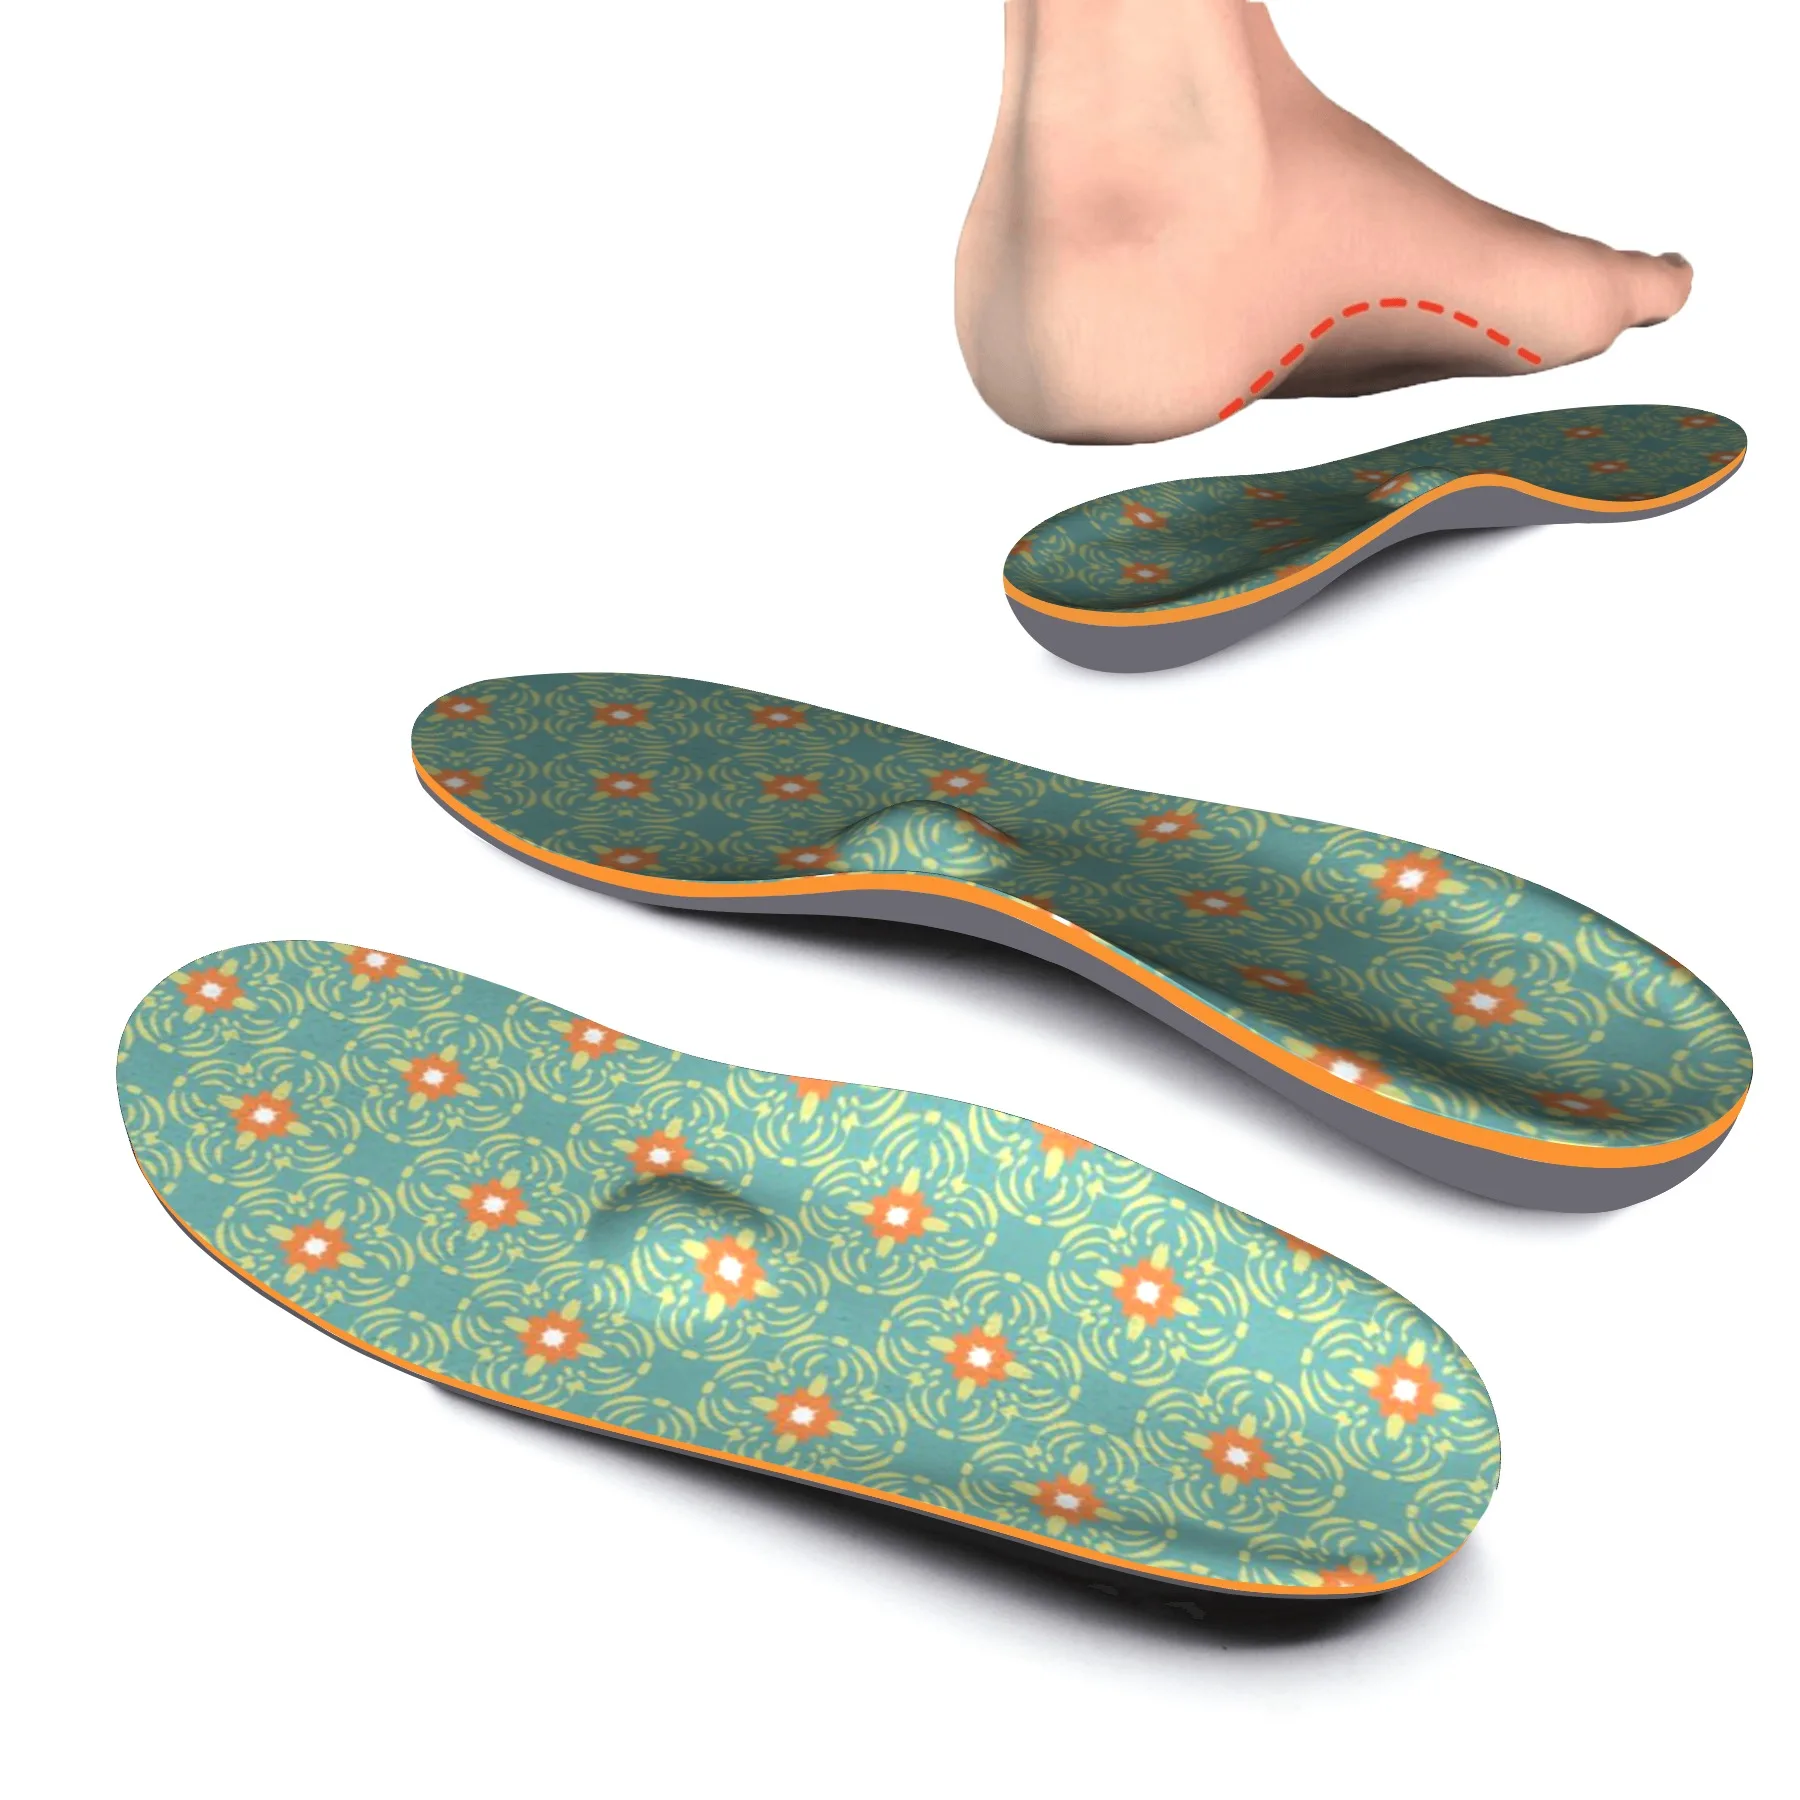 Arch Support Plantar Fasciitis Metatarsal Orthopedics Insoles Sneakers Flat Feet Heel Spurs Orthopedic Pads Spots Black White